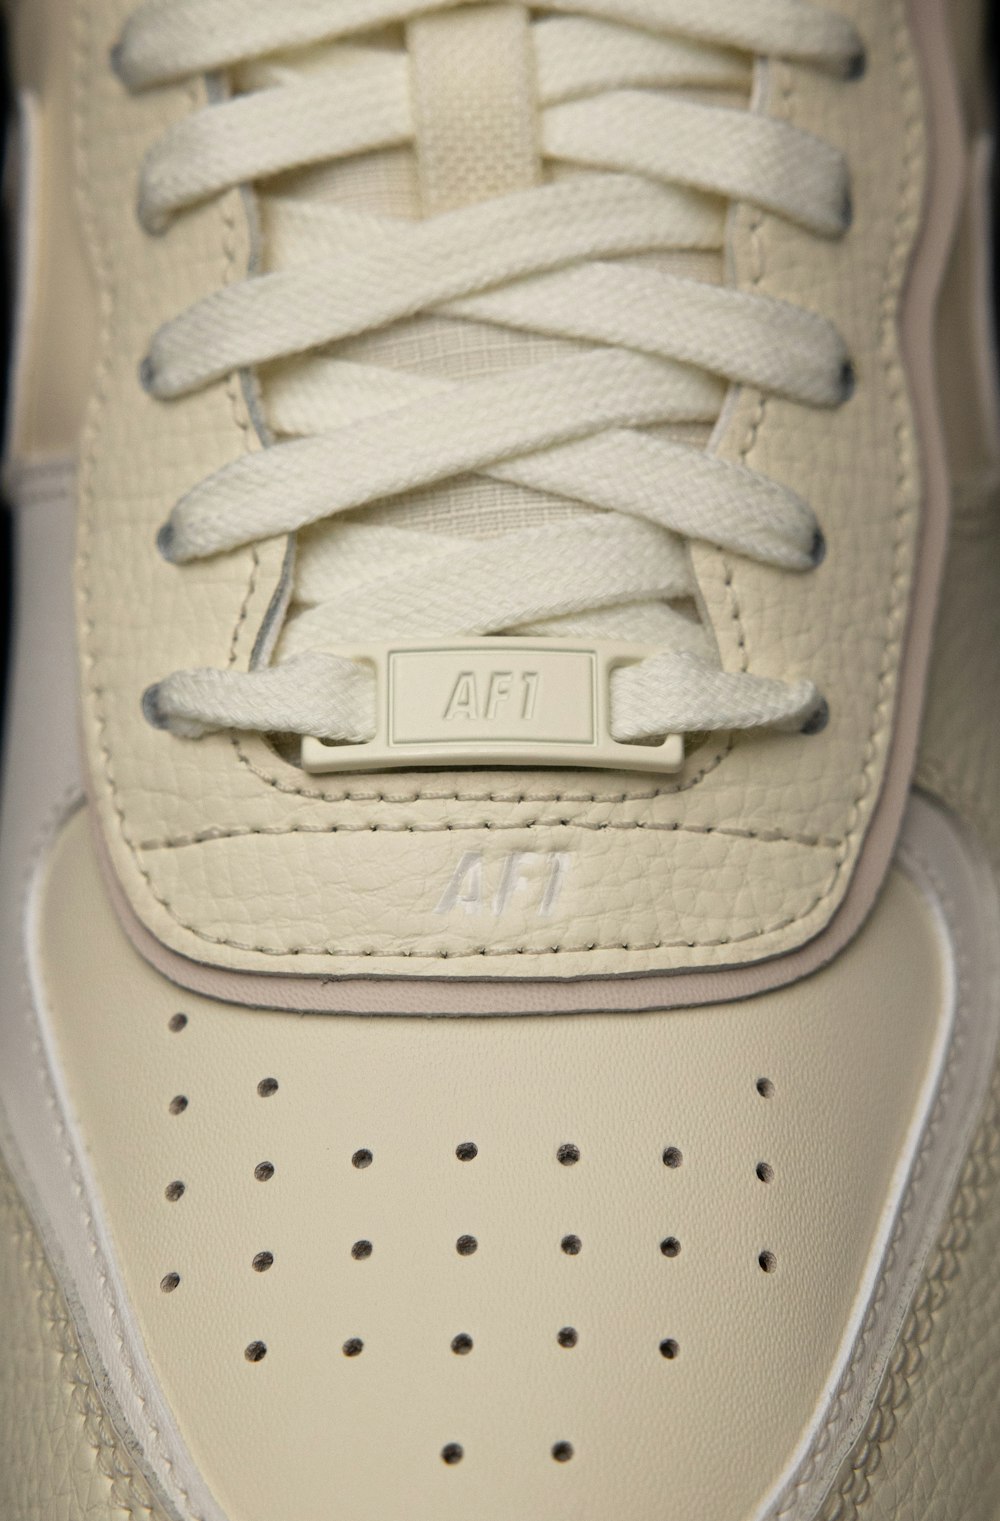 Zapatillas Nike Air Force 1 blancas